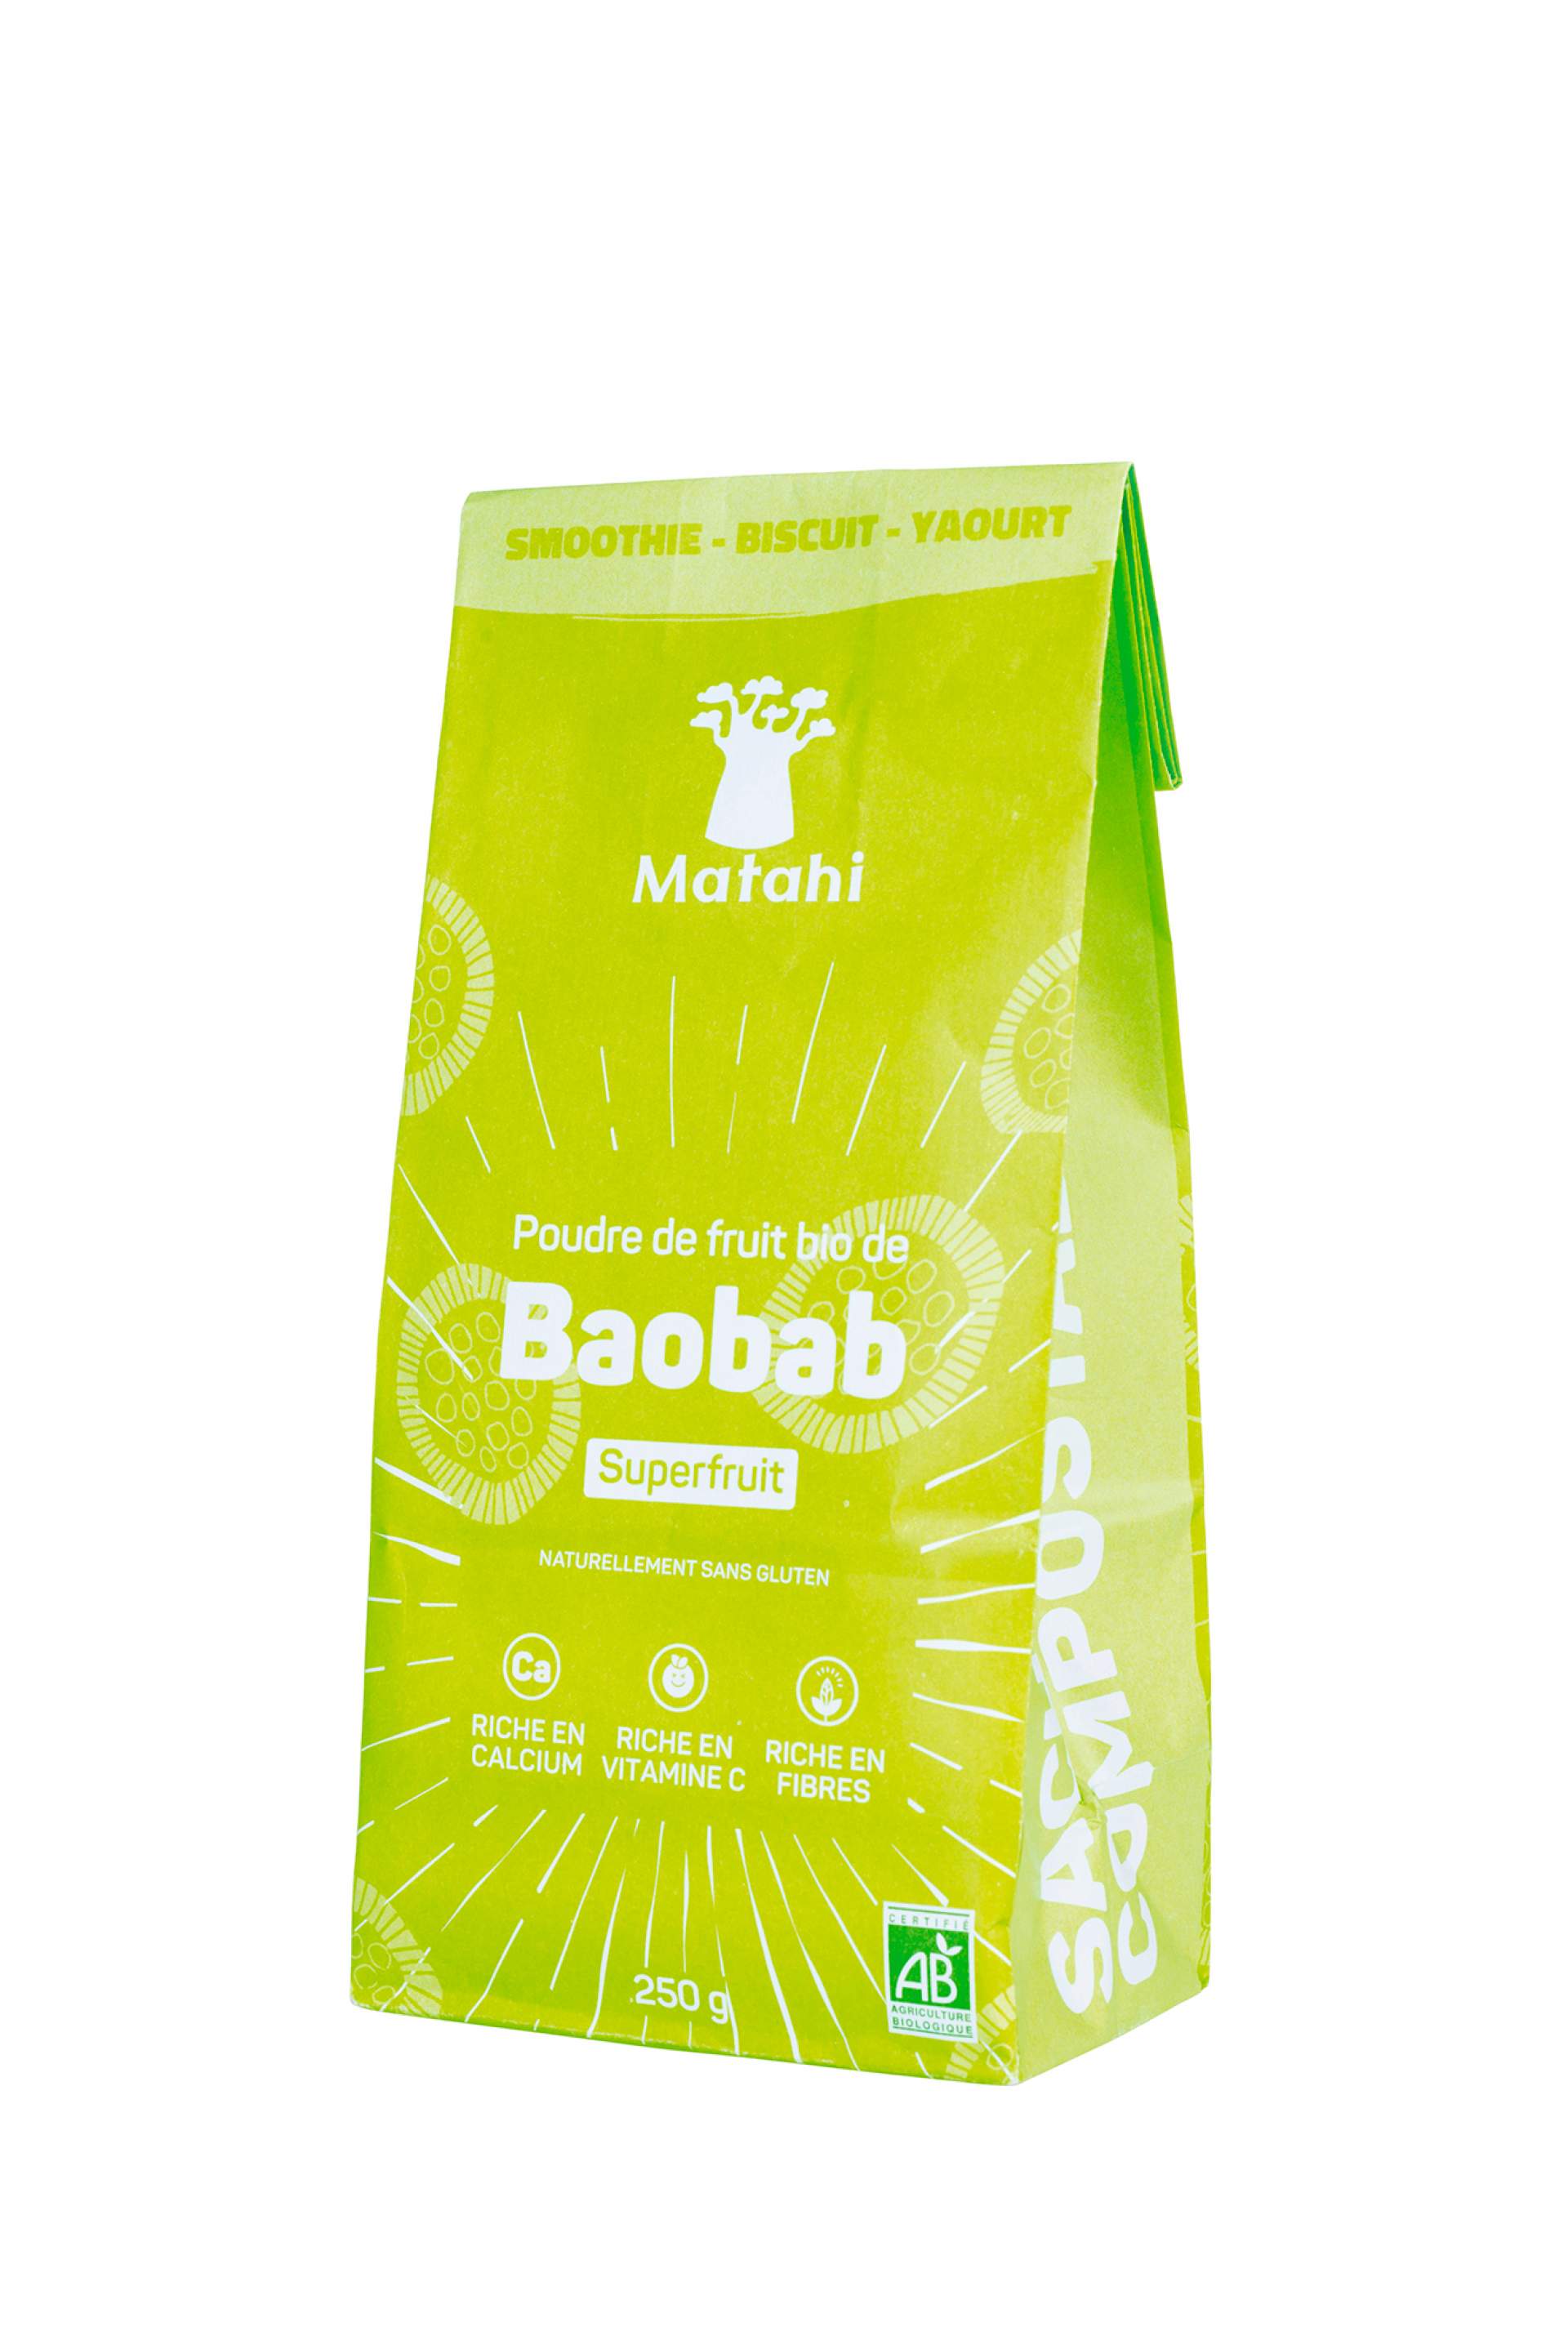 Création du packaging de la farine baobab